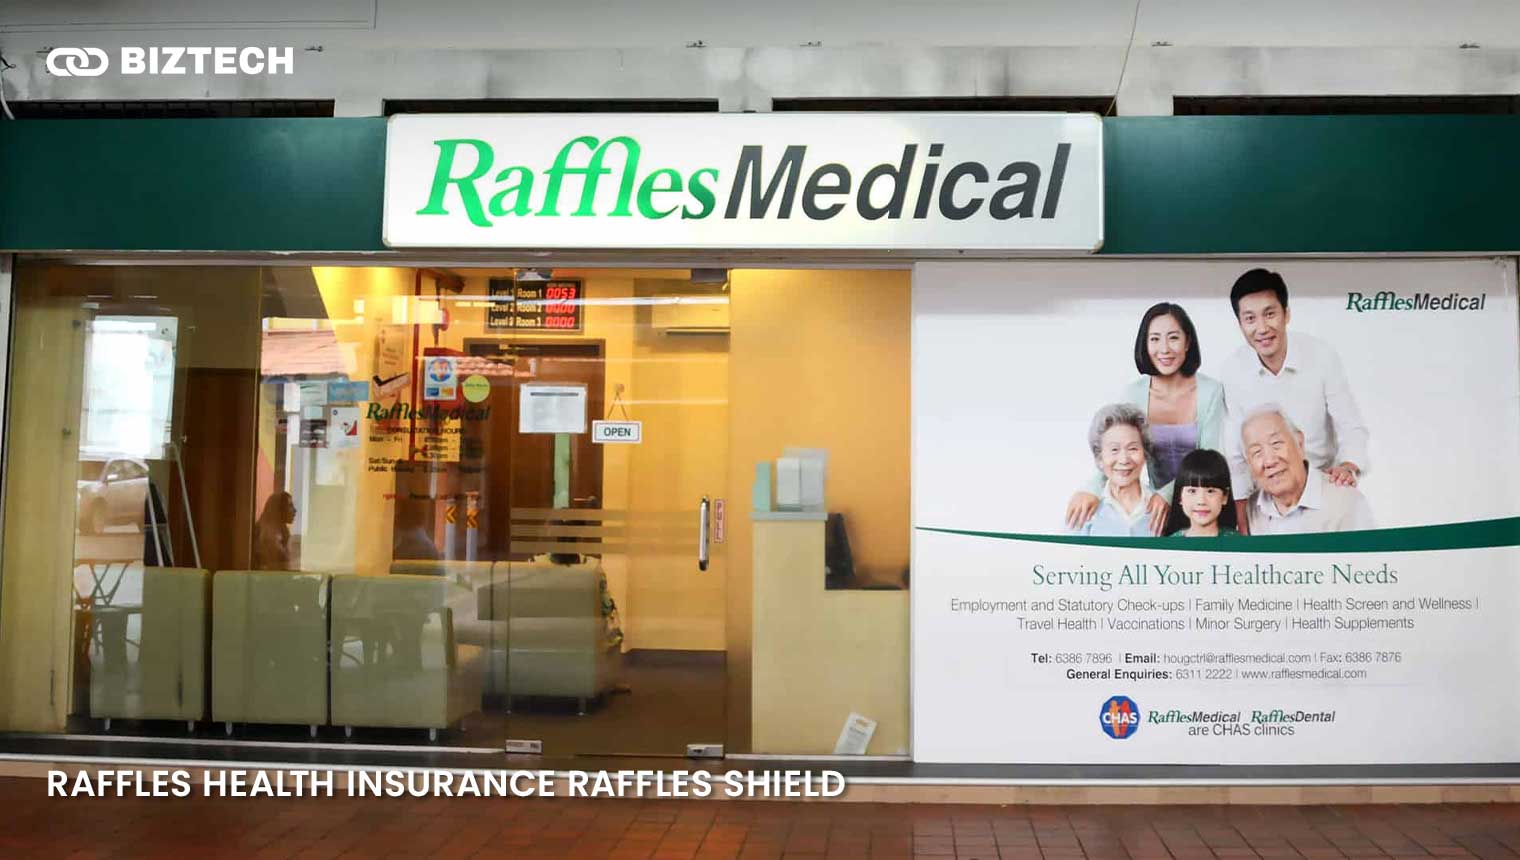 Raffles Health Insurance Raffles Shield